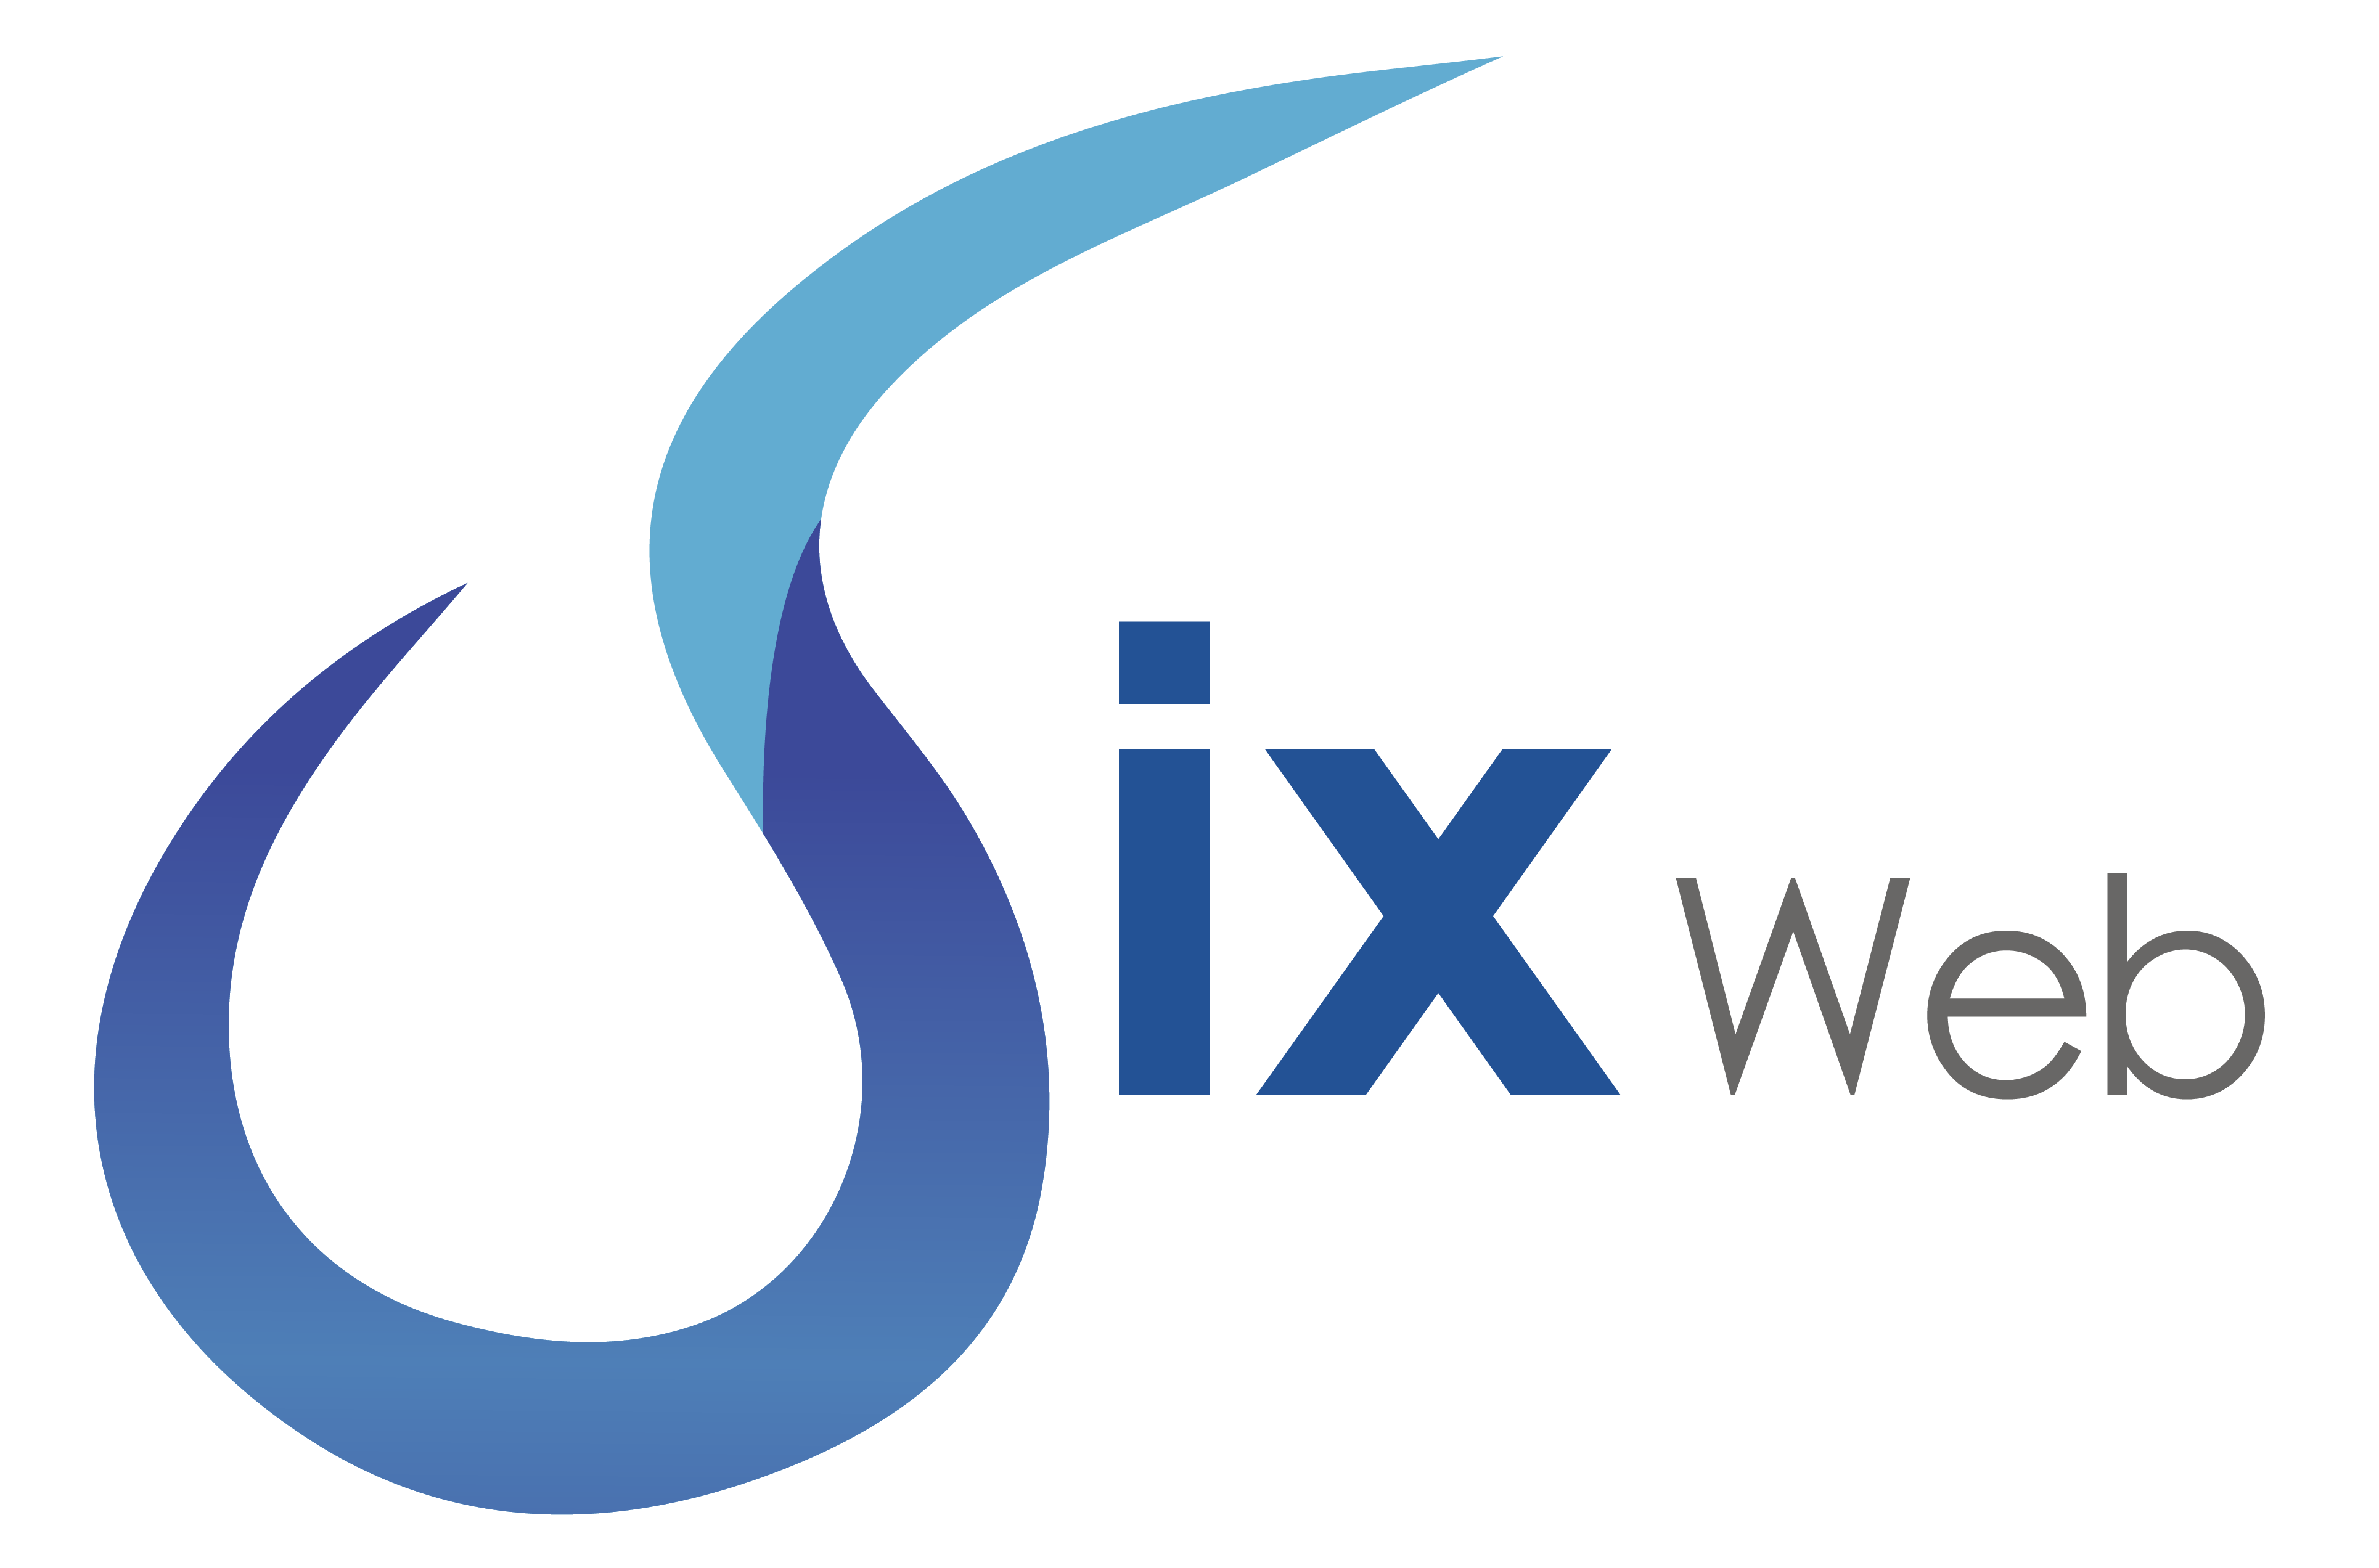 6ix WEB